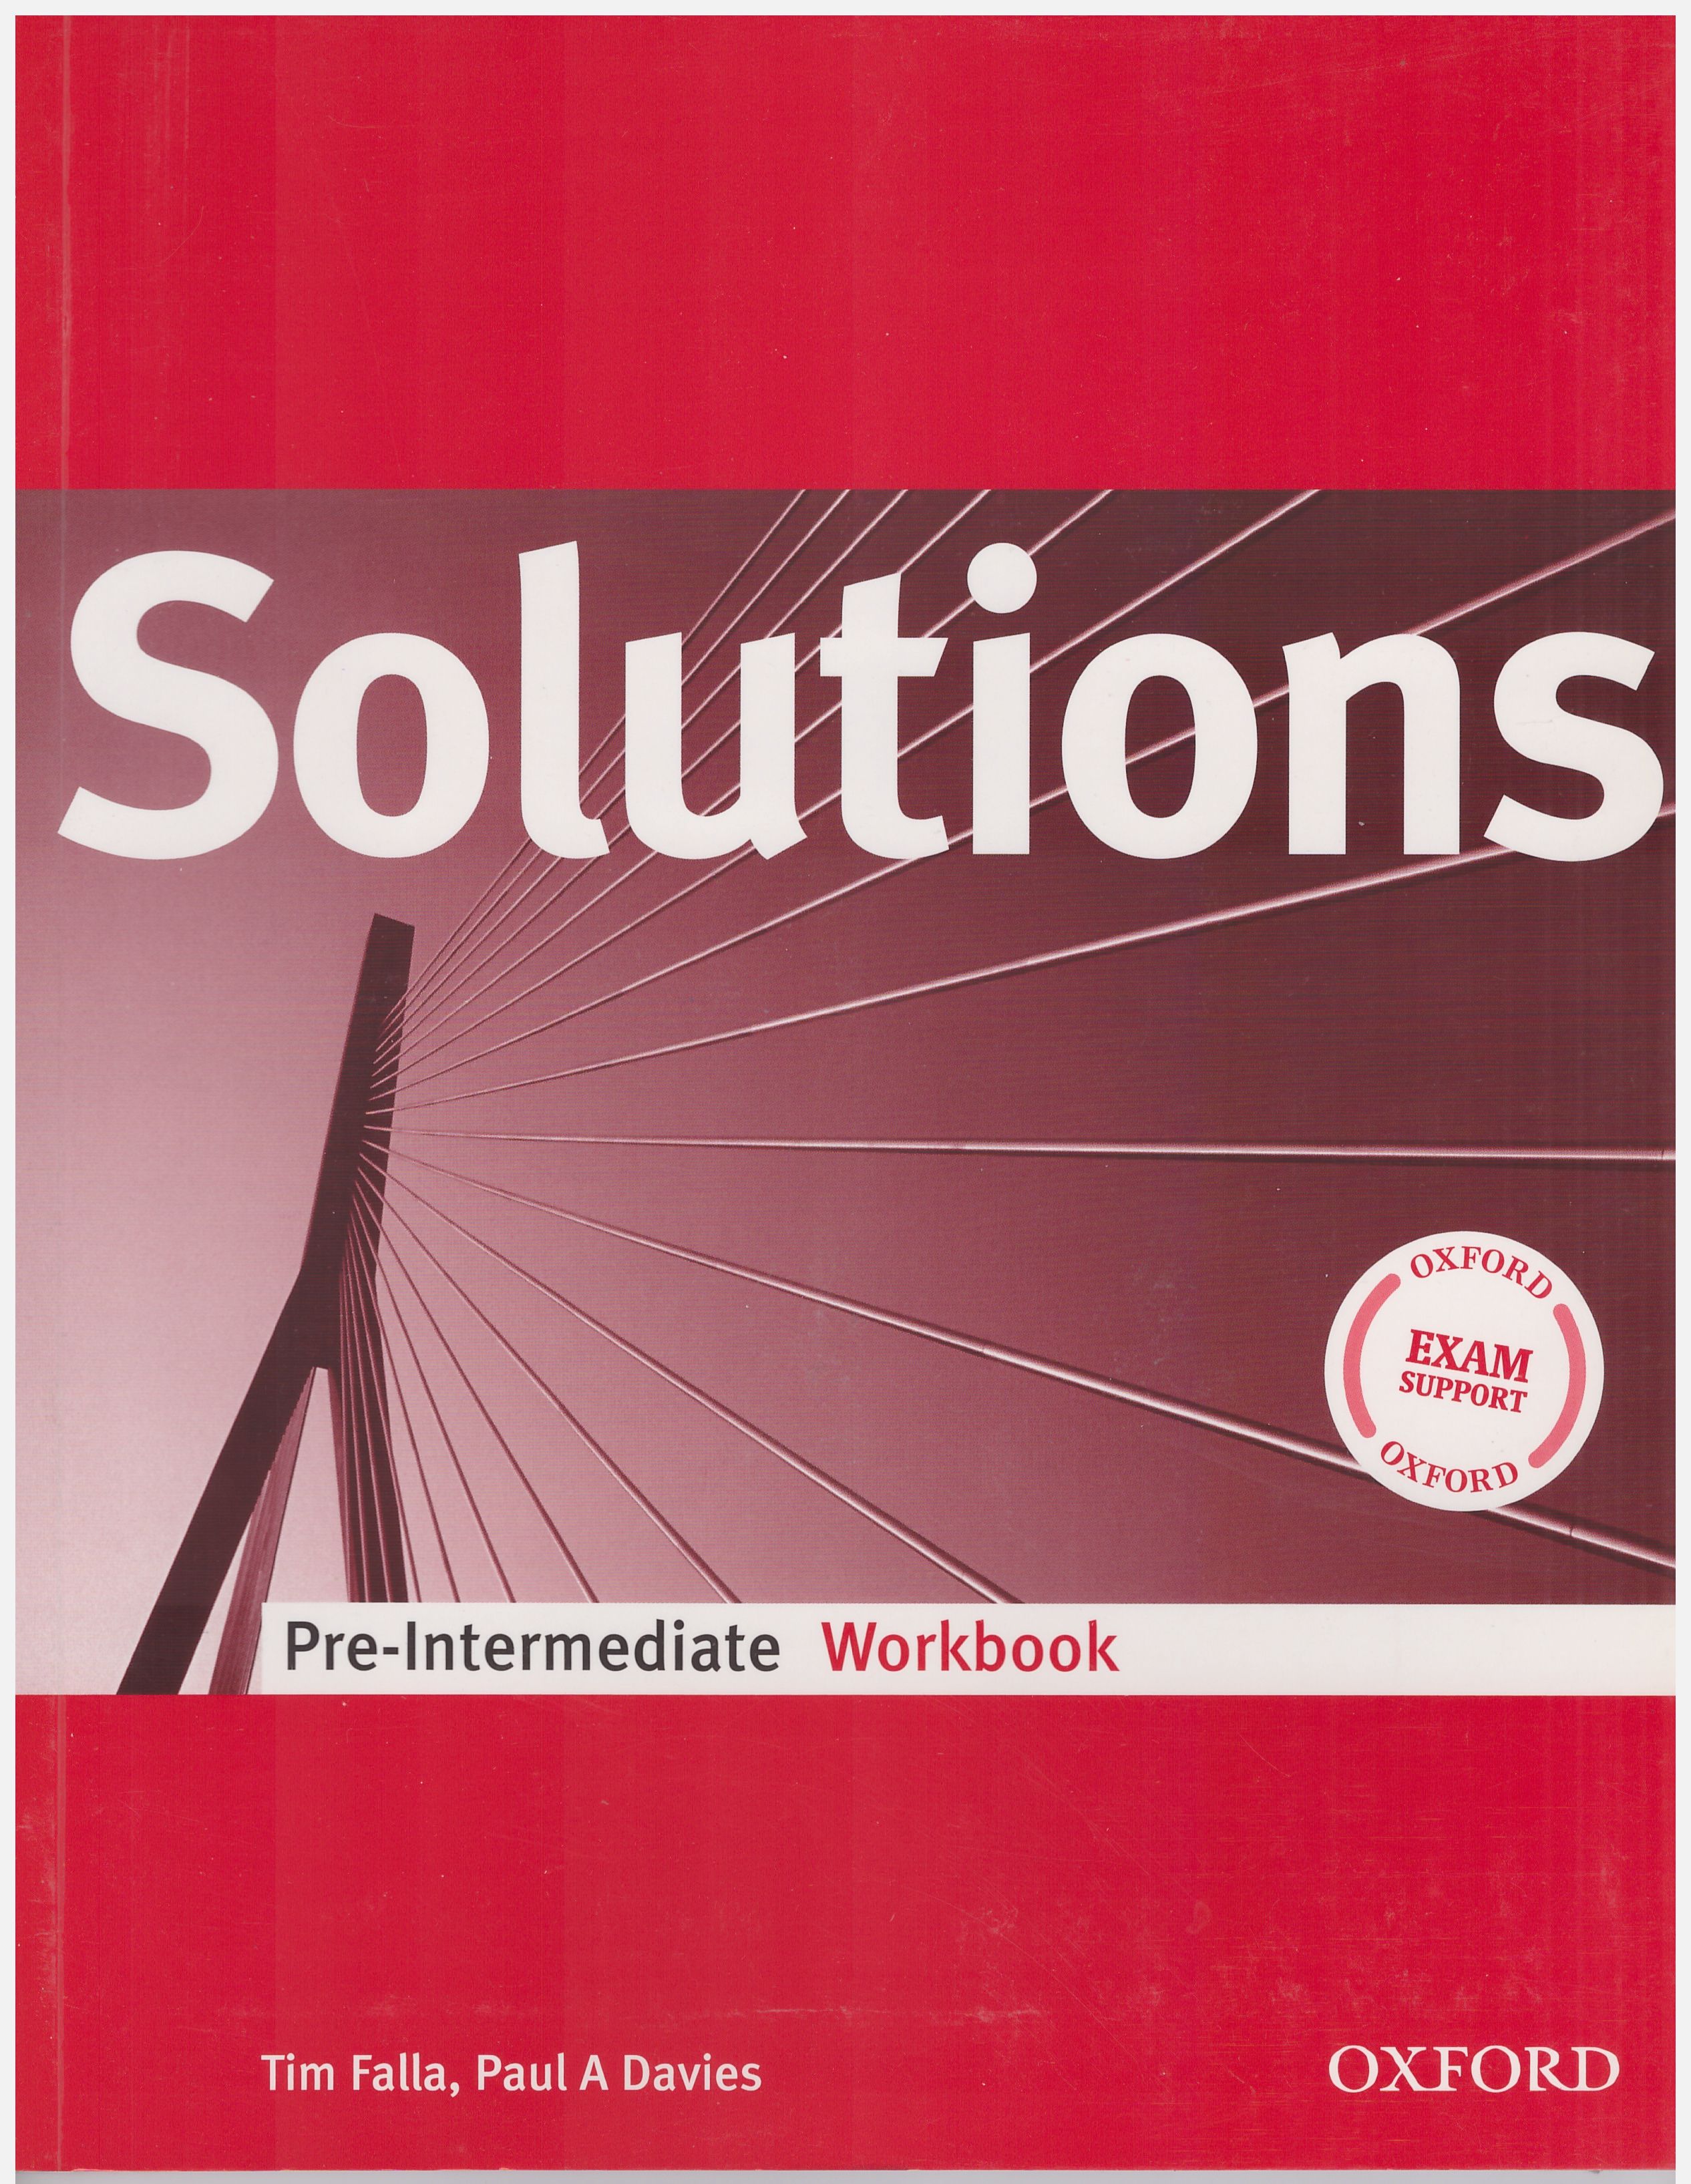 Solutions levels. Солюшнс воркбук пре интермедиат. Solutions (3rd Edition) pre-Intermediate Workbook 2017, Oxford. Солушенс преитермедиат. Solution учебник англ.